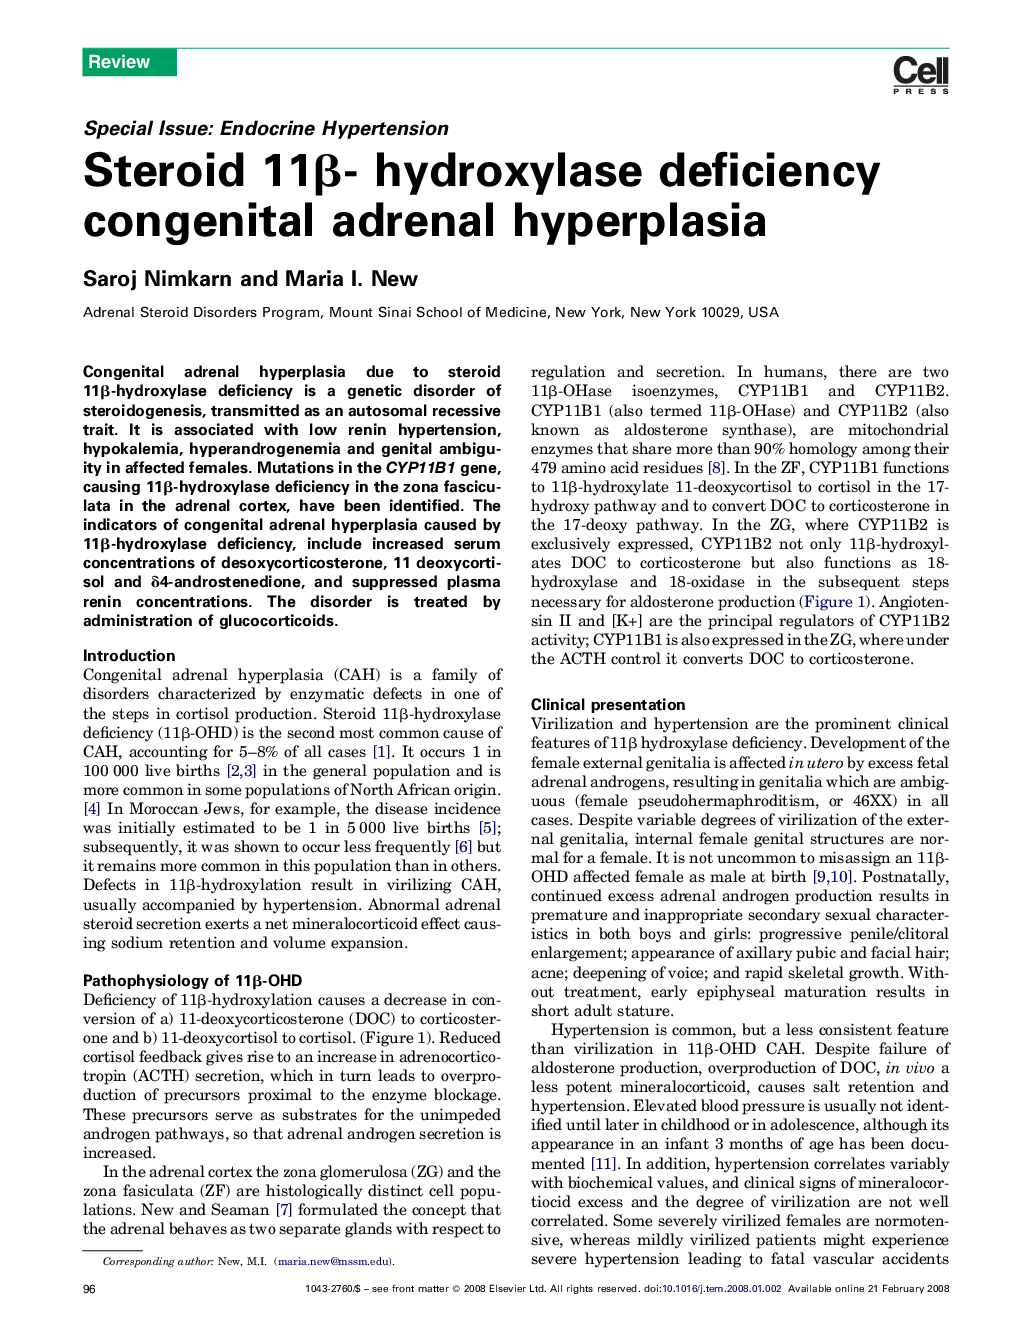 Steroid 11β- hydroxylase deficiency congenital adrenal hyperplasia